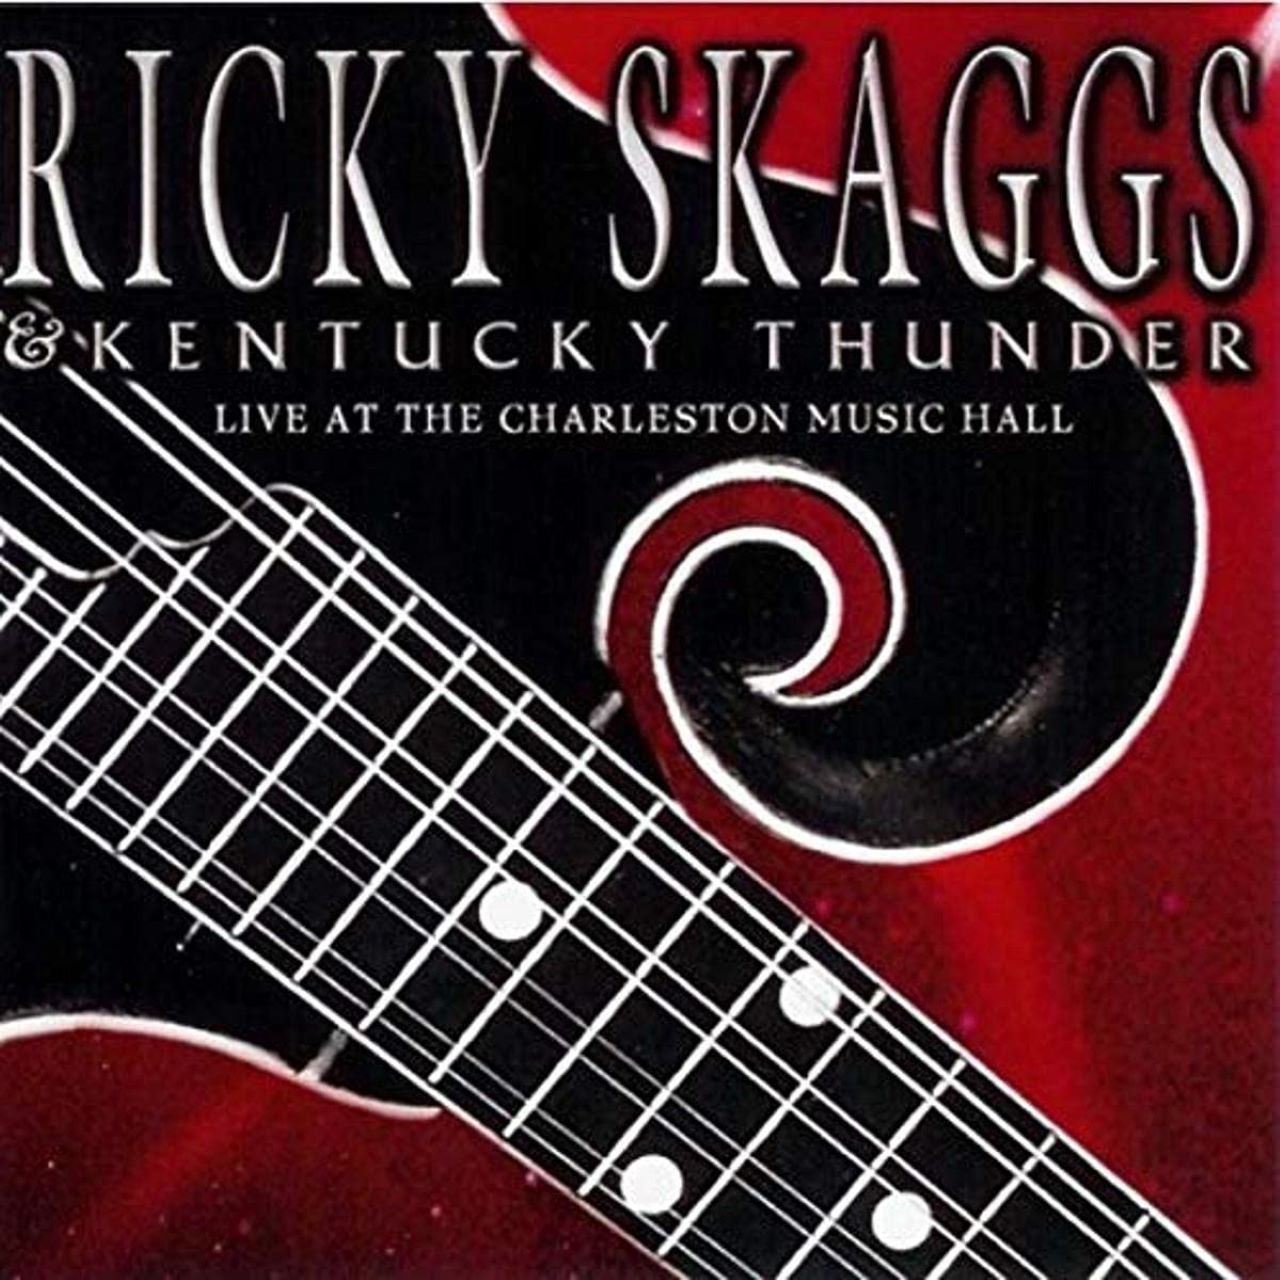 Ricky Skaggs & Kentucky Thunder - Live From The Charleston Music Hall cover album